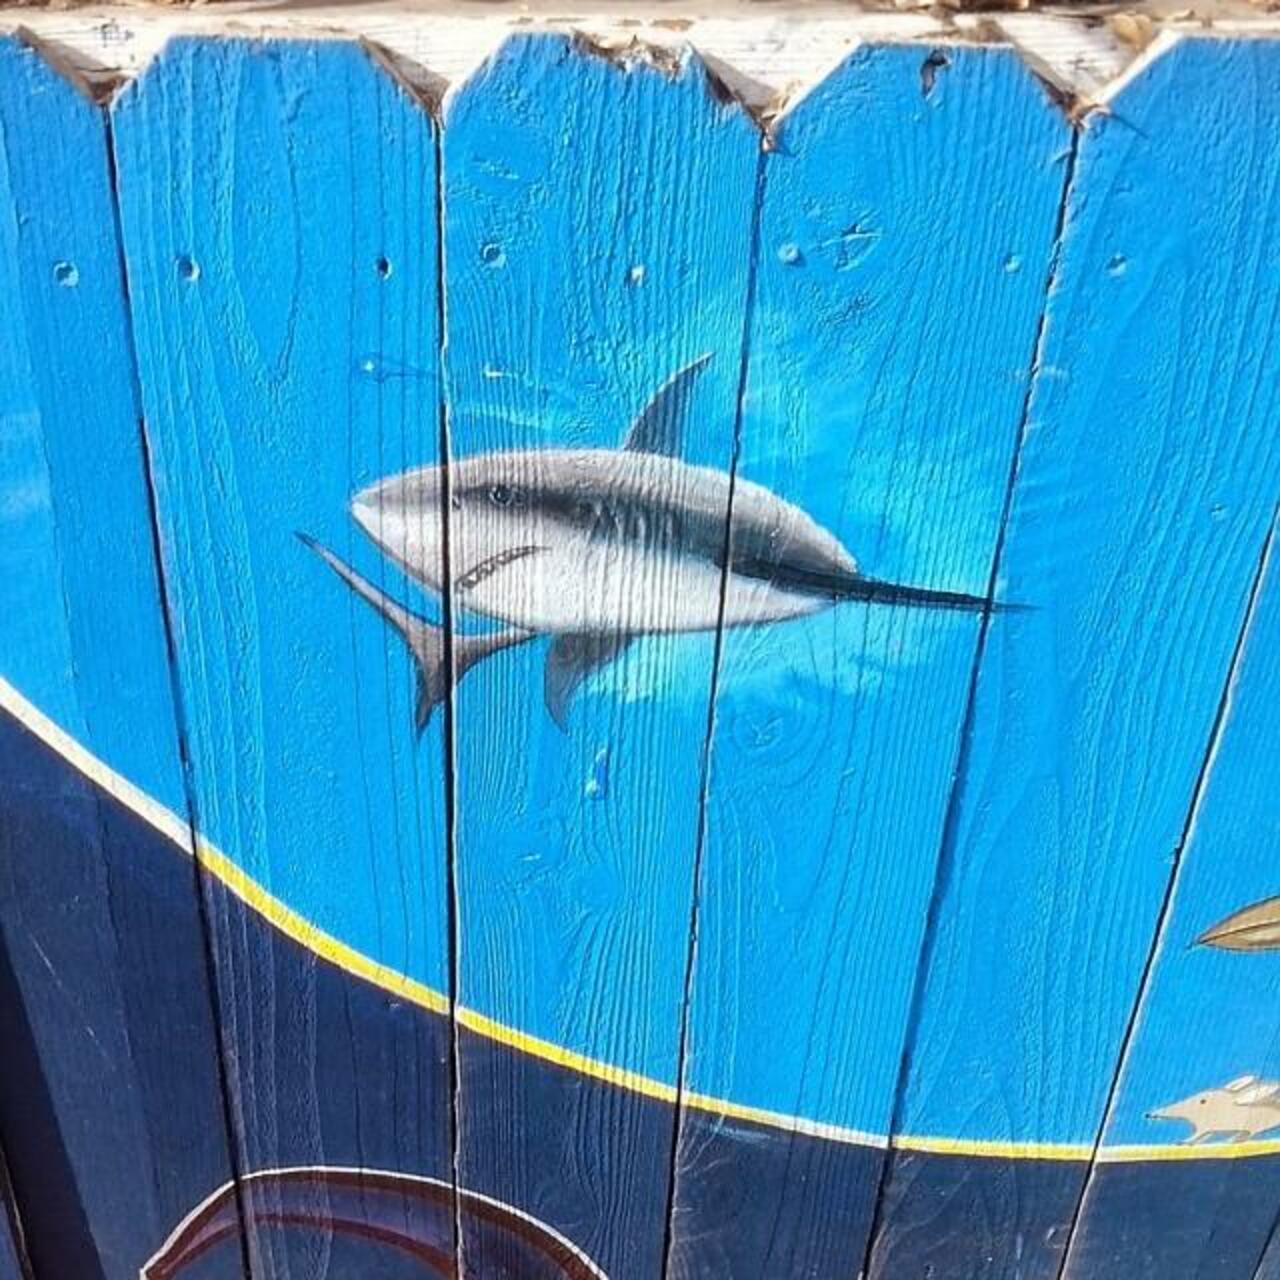 #venicebeach  #shark #graffiti #art http://ift.tt/1zeQjNT http://t.co/aOBYIJDo2i